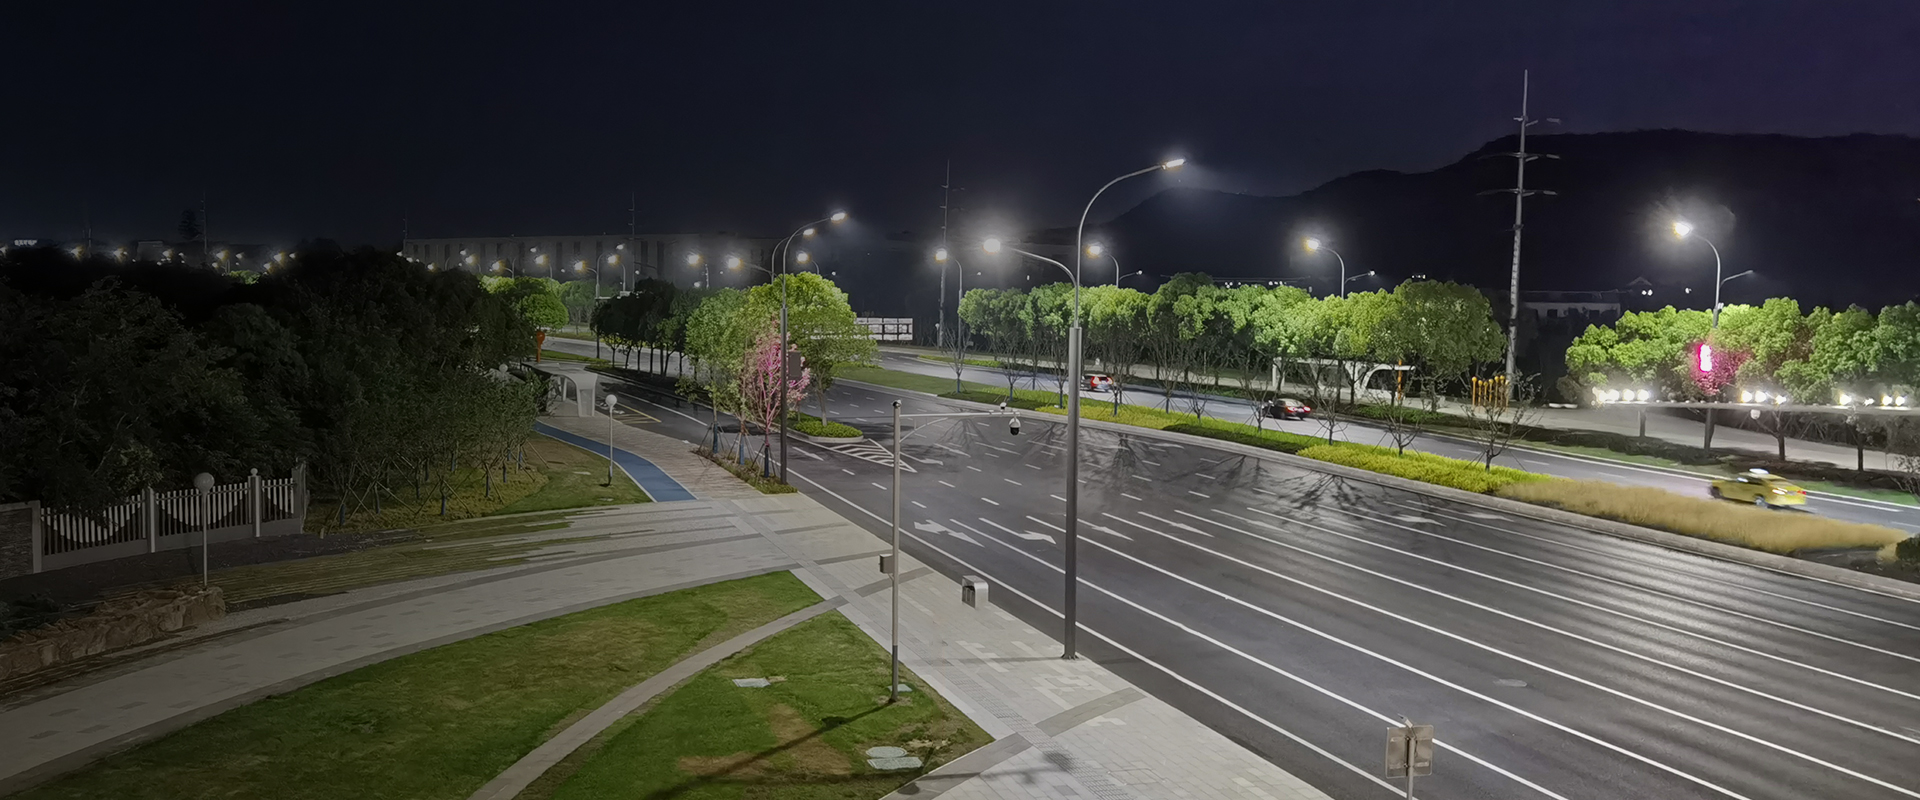 Urban Smart Lighting Solutions